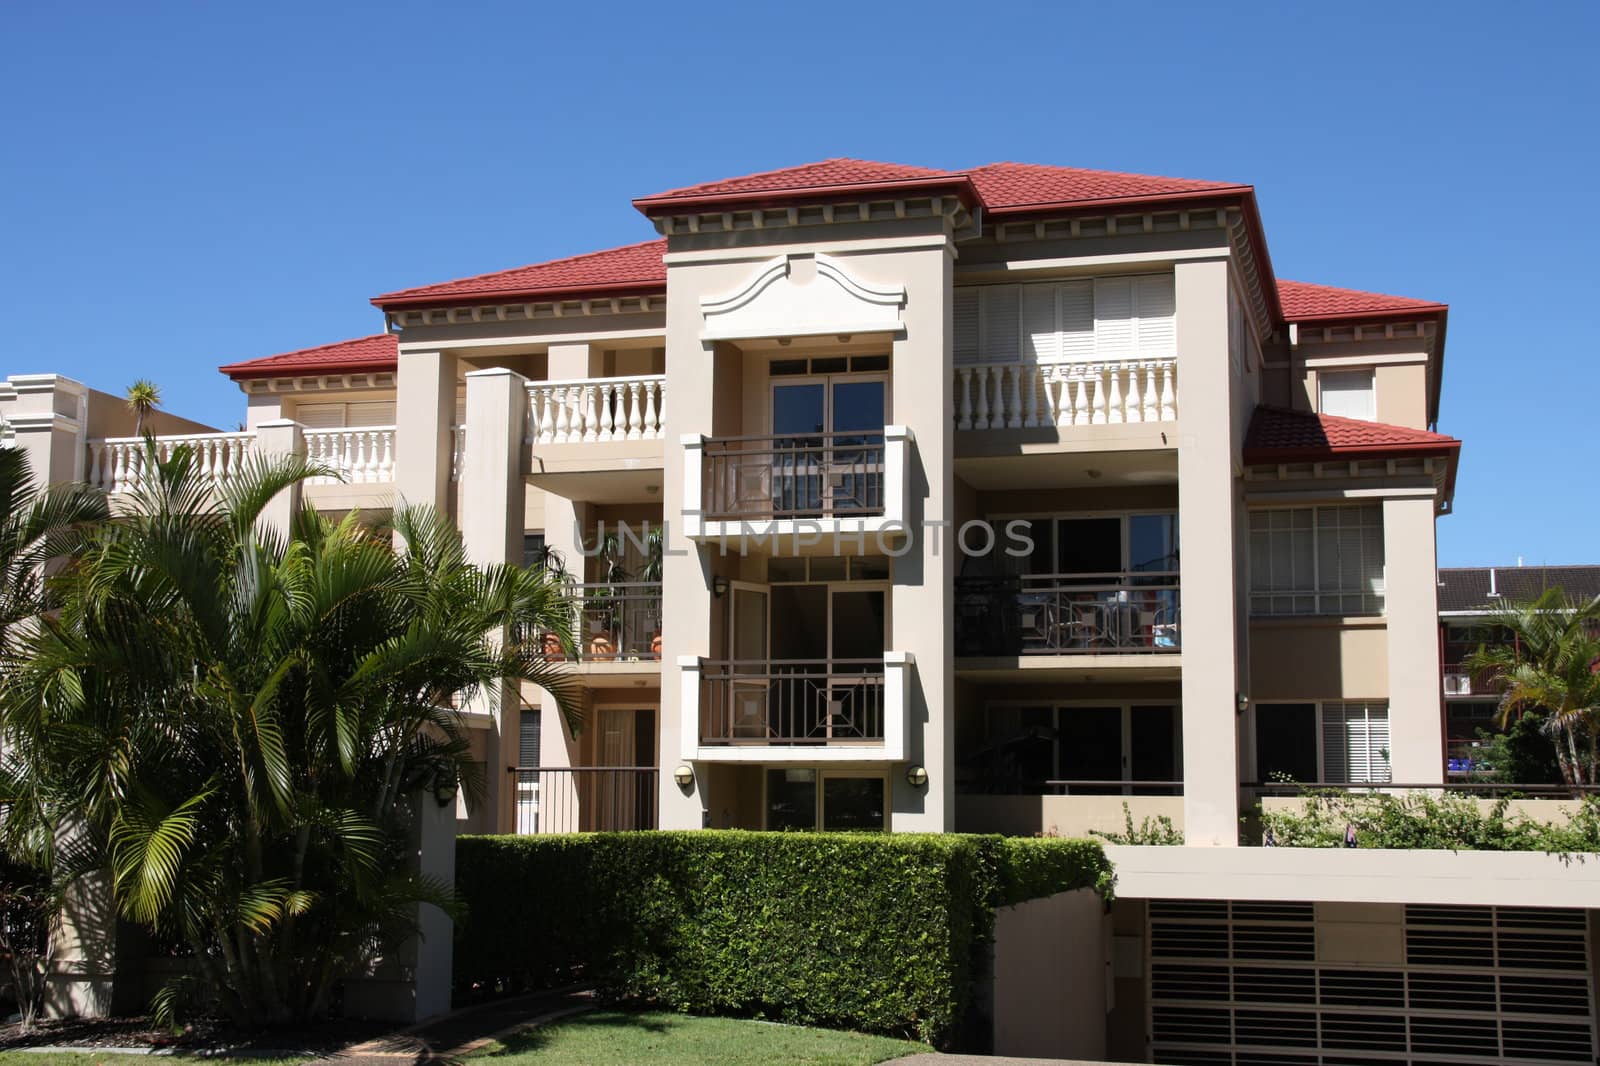 Luxury house in Gold Coast region of Queensland, Australia